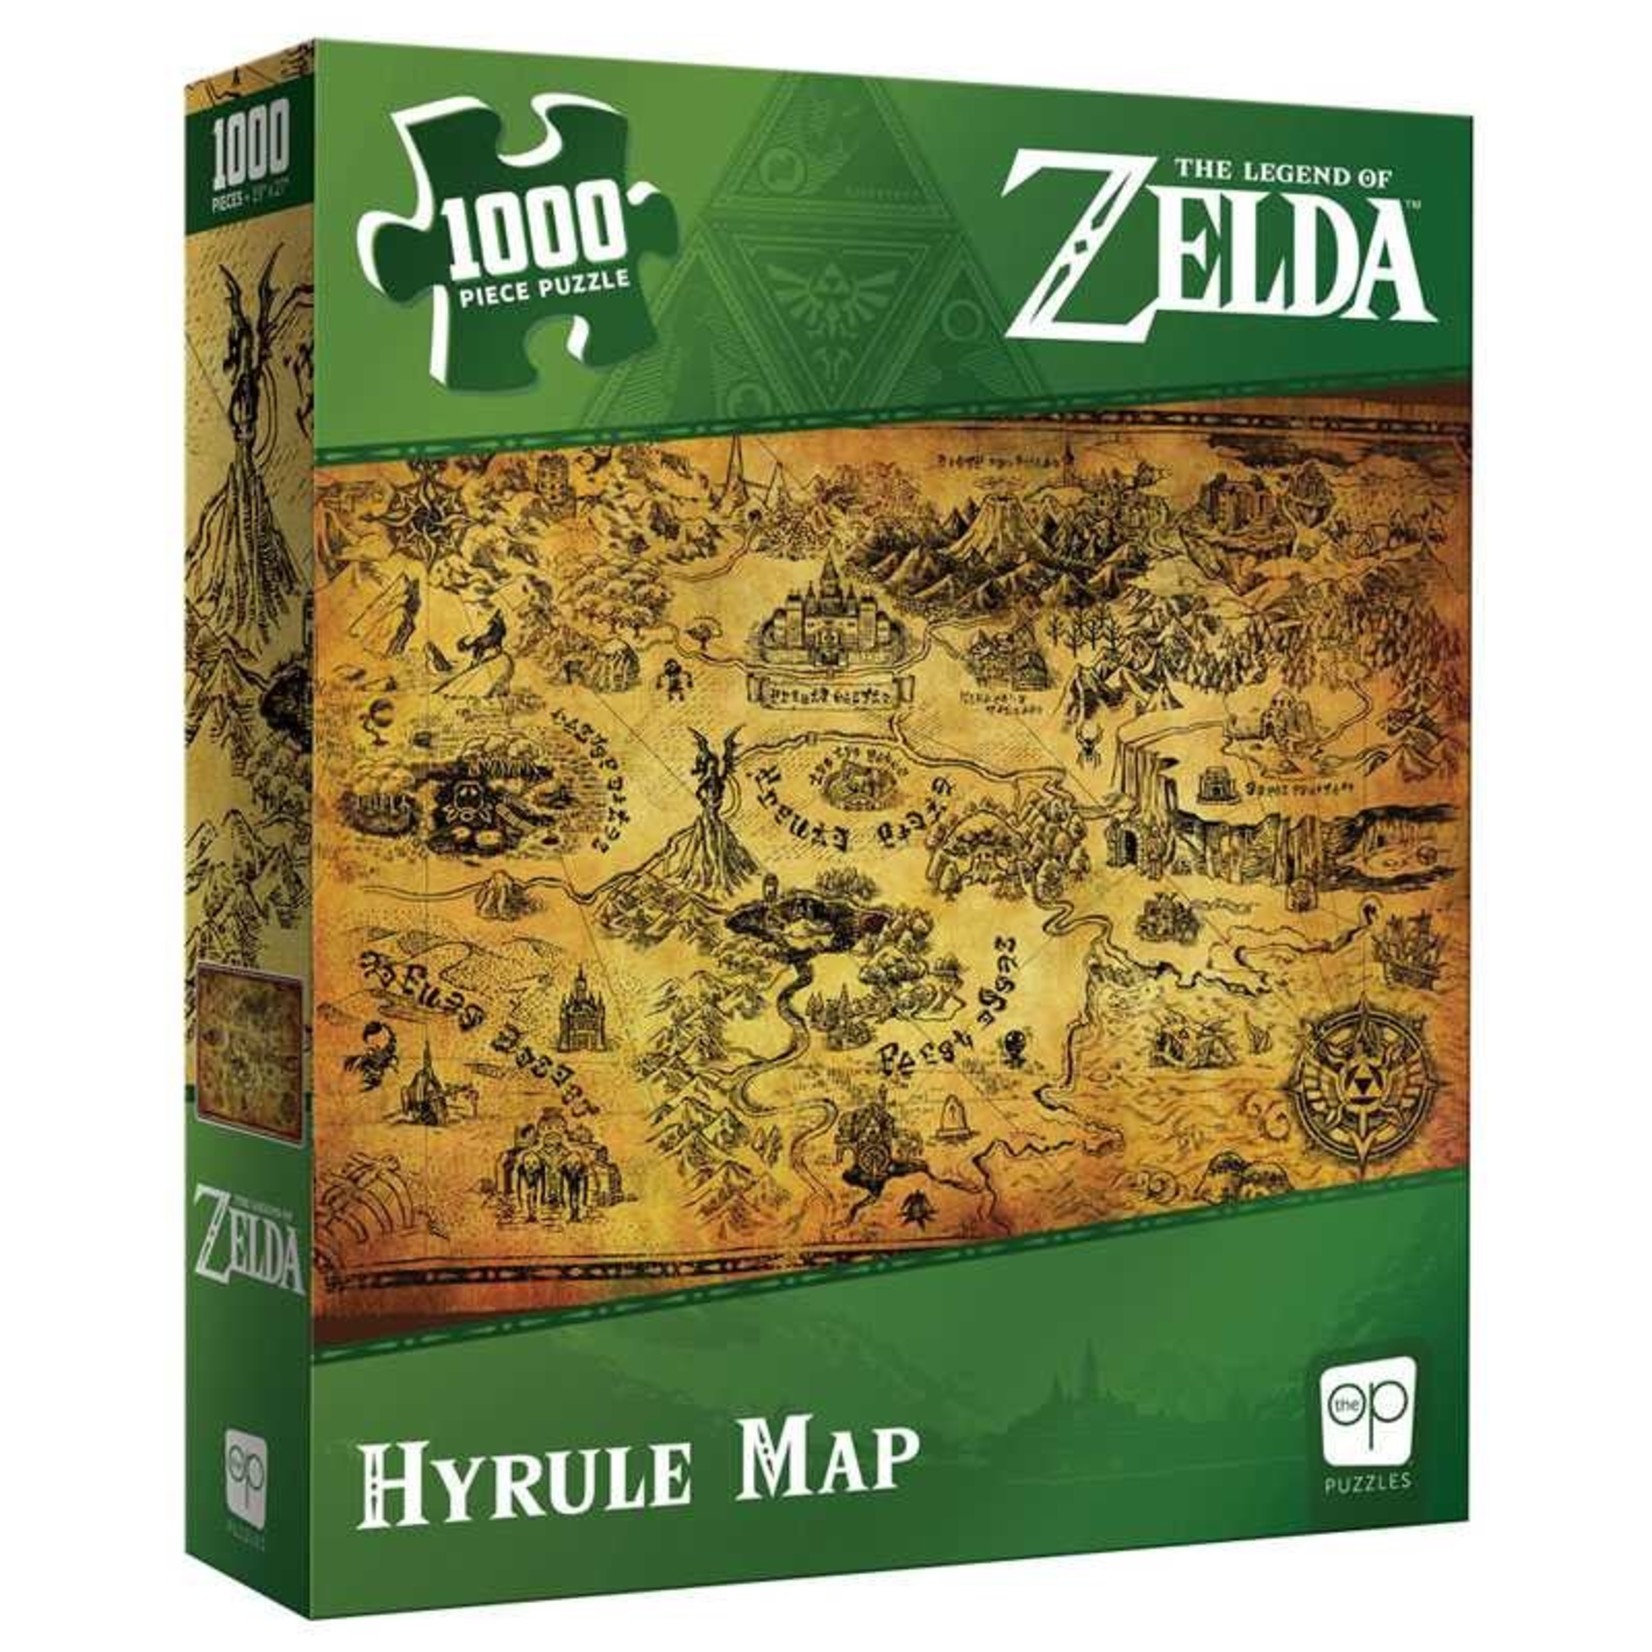 The Op The Legend of Zelda Hyrule Map 1000 Piece Puzzle